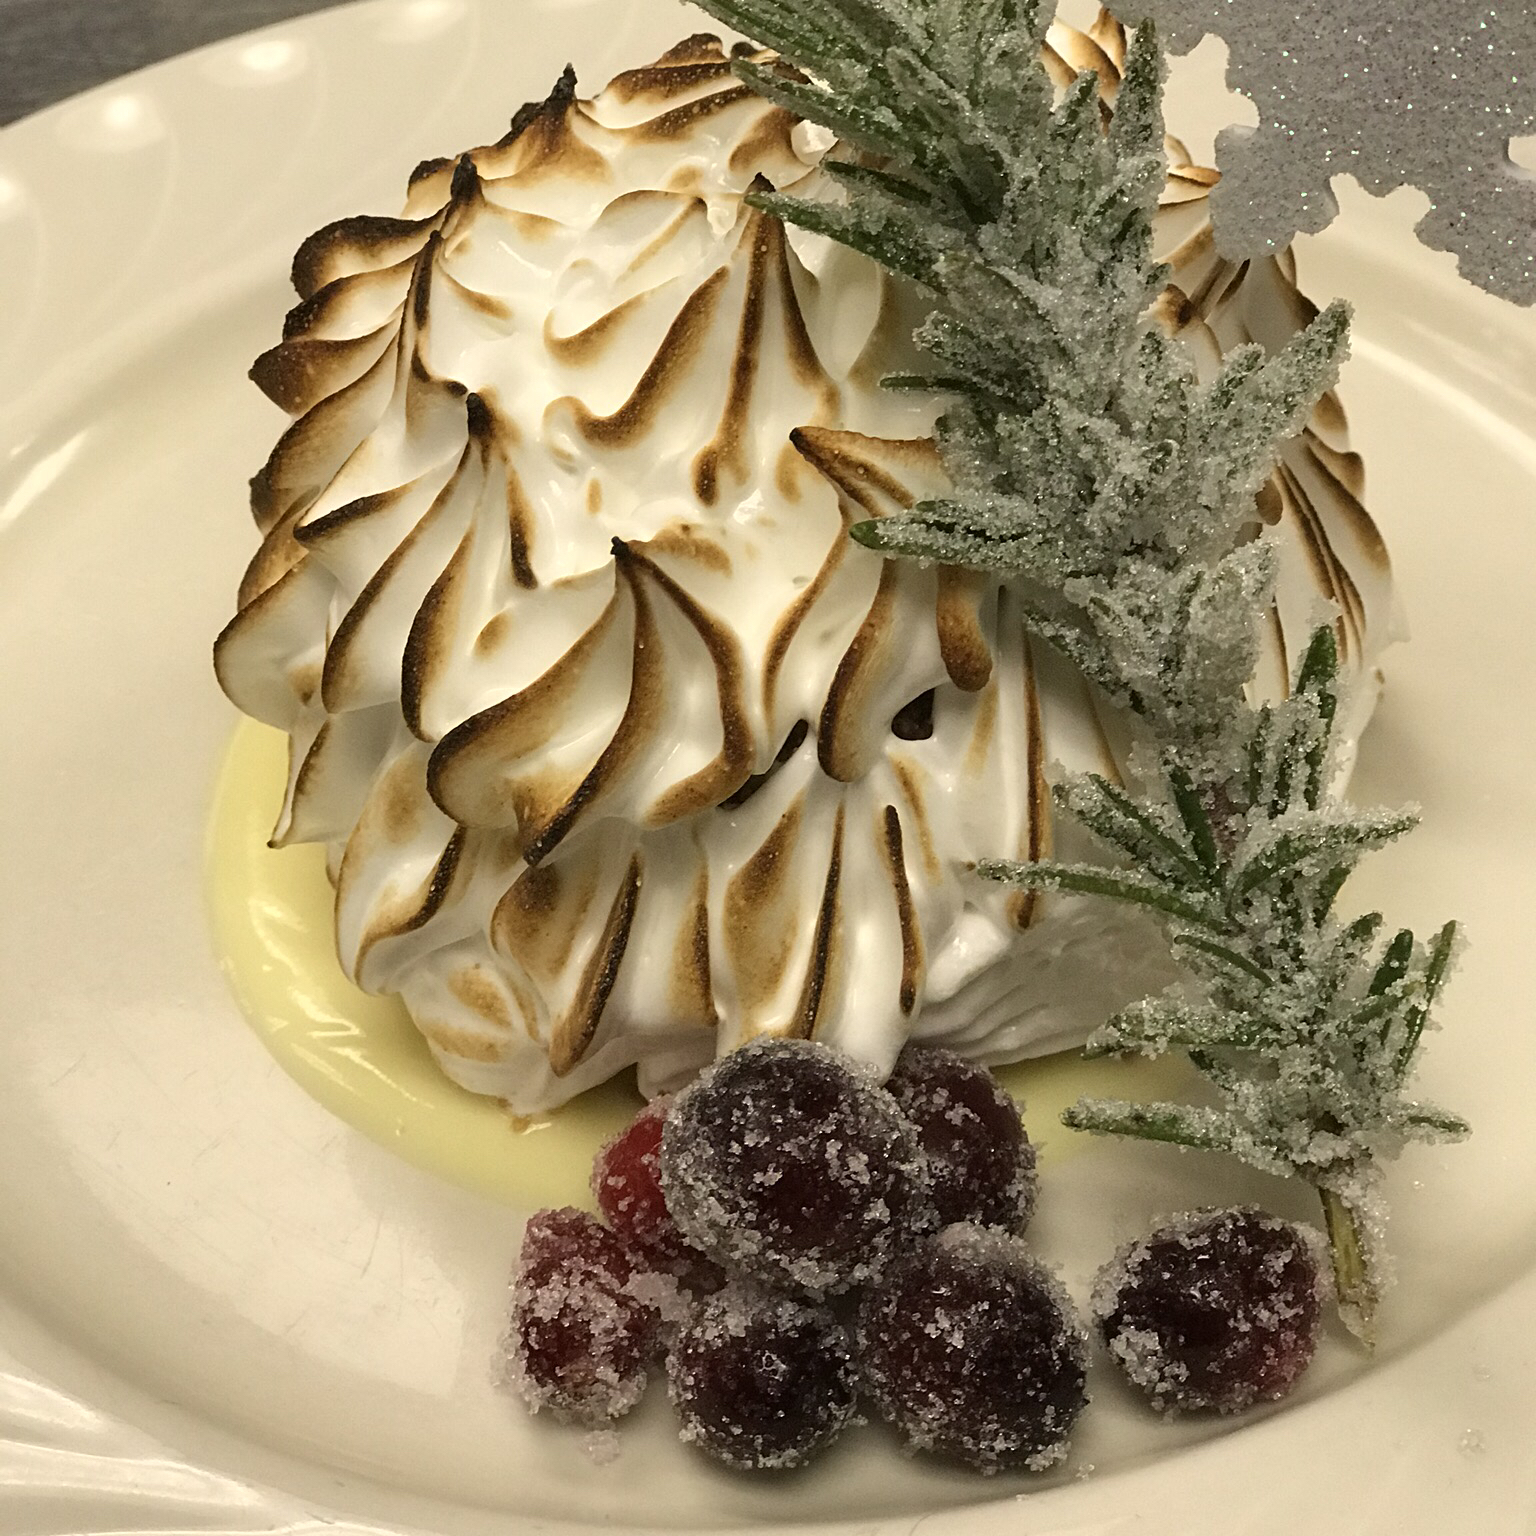 Baked Alaska Dessert 